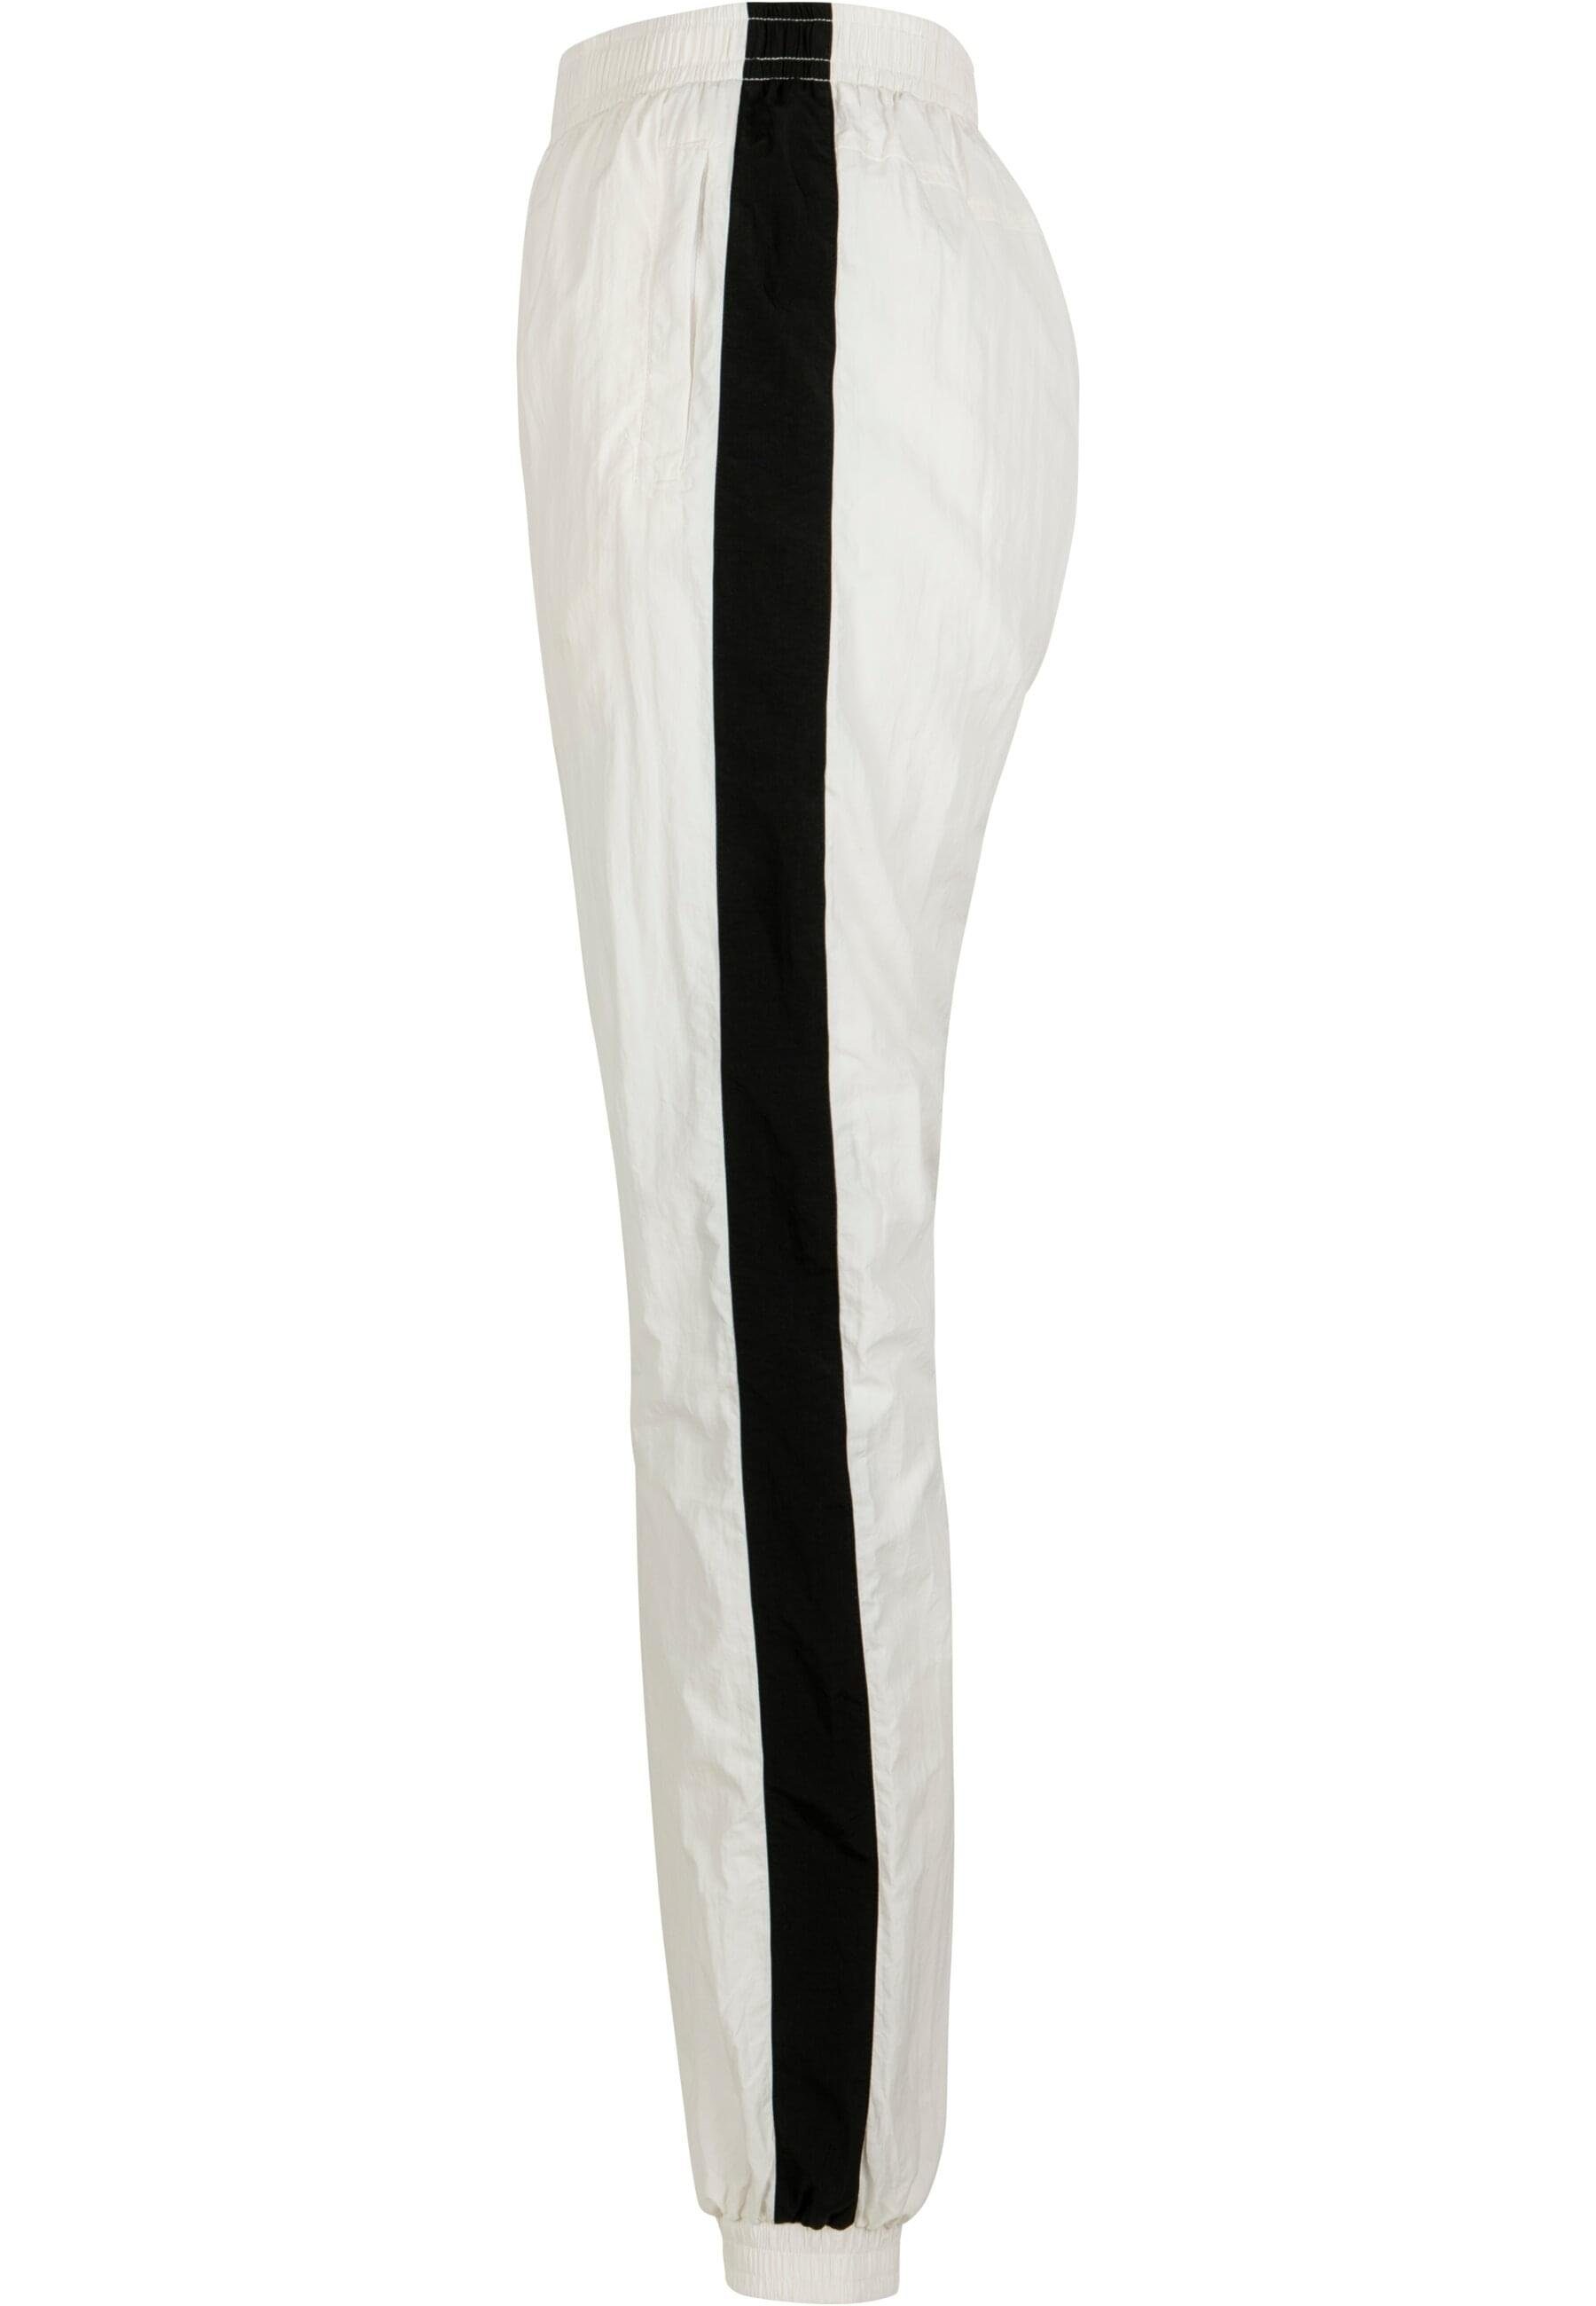 CLASSICS URBAN Damen Ladies Pants Stoffhose white/black Crinkle Striped (1-tlg)